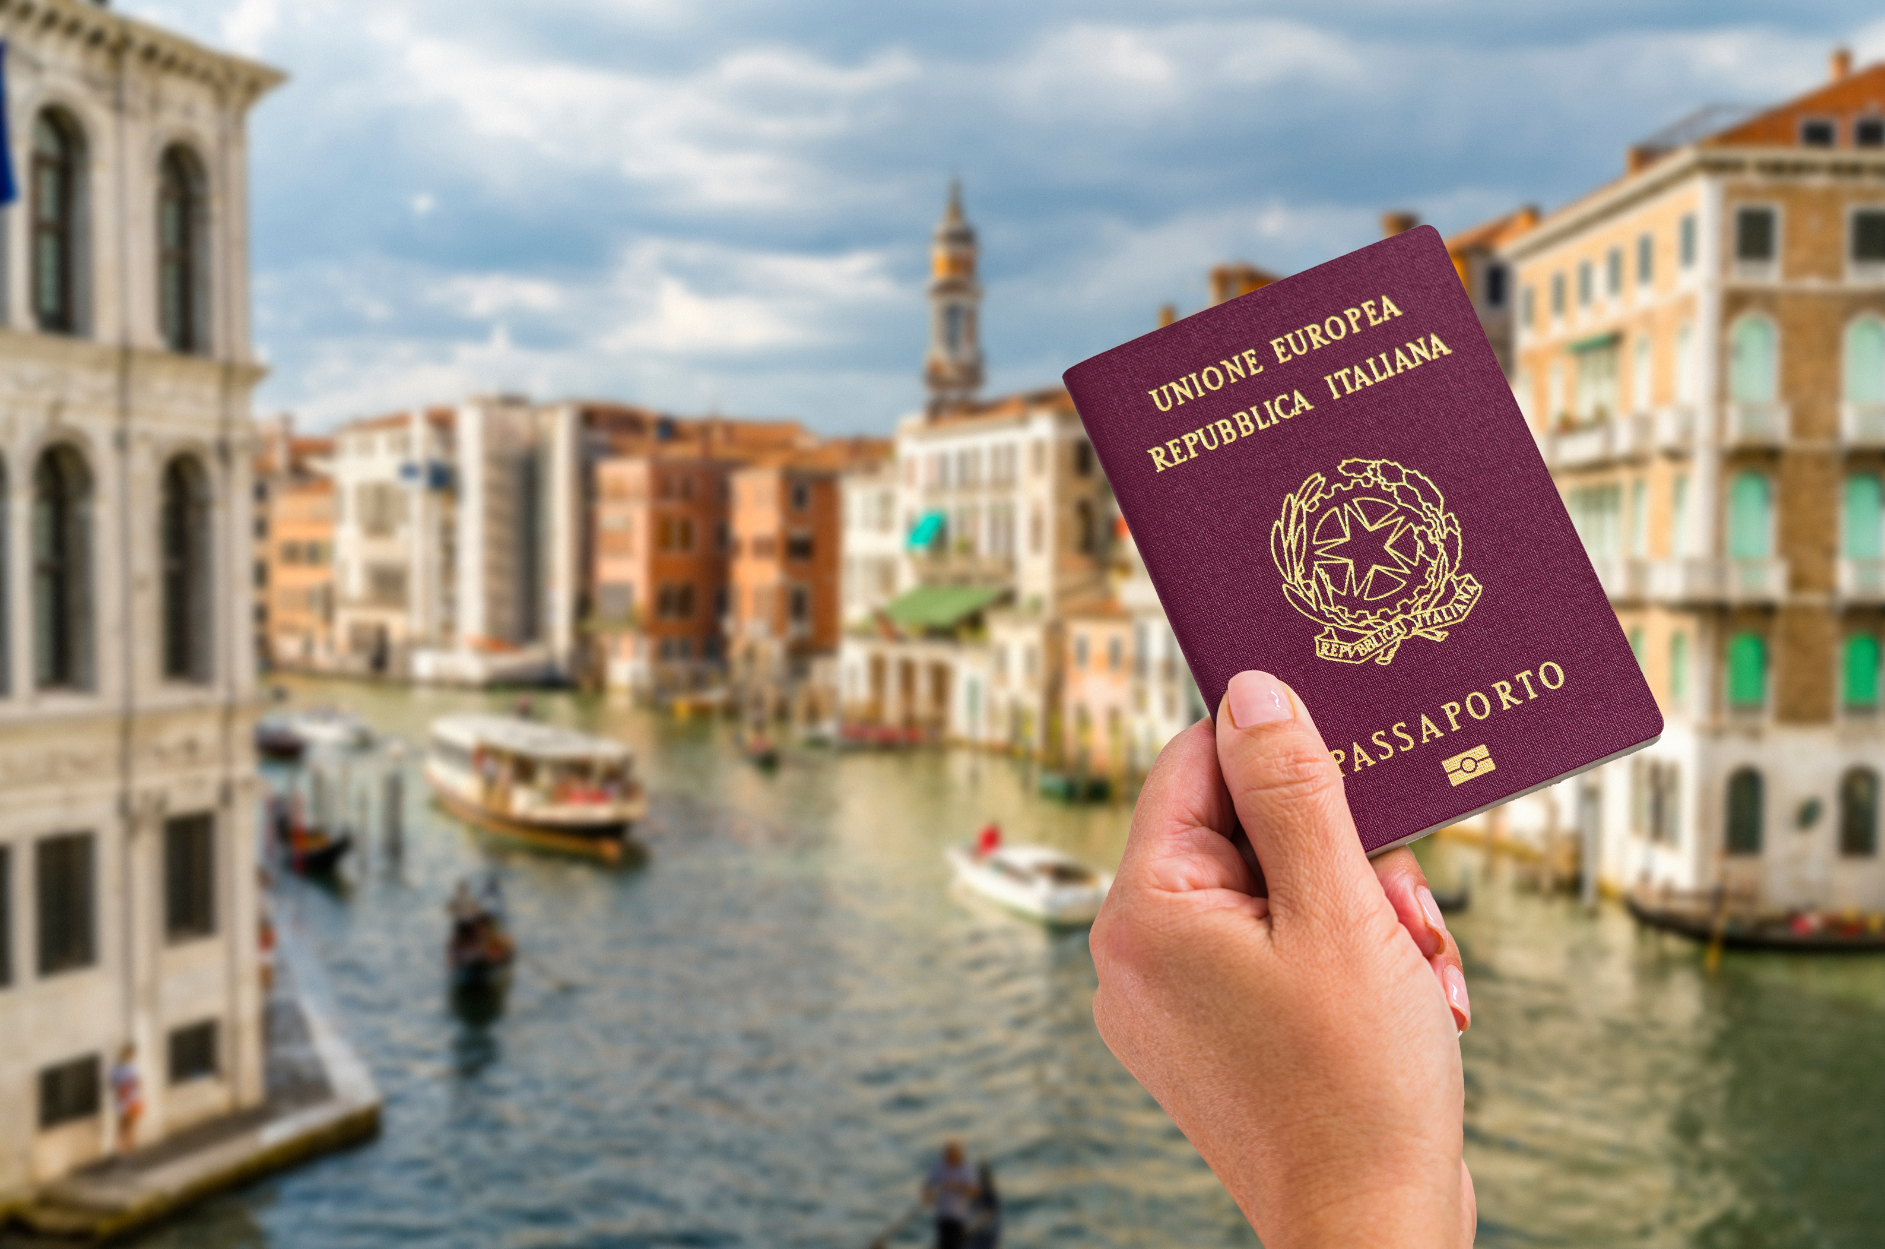 Pasaporte italiano en mano